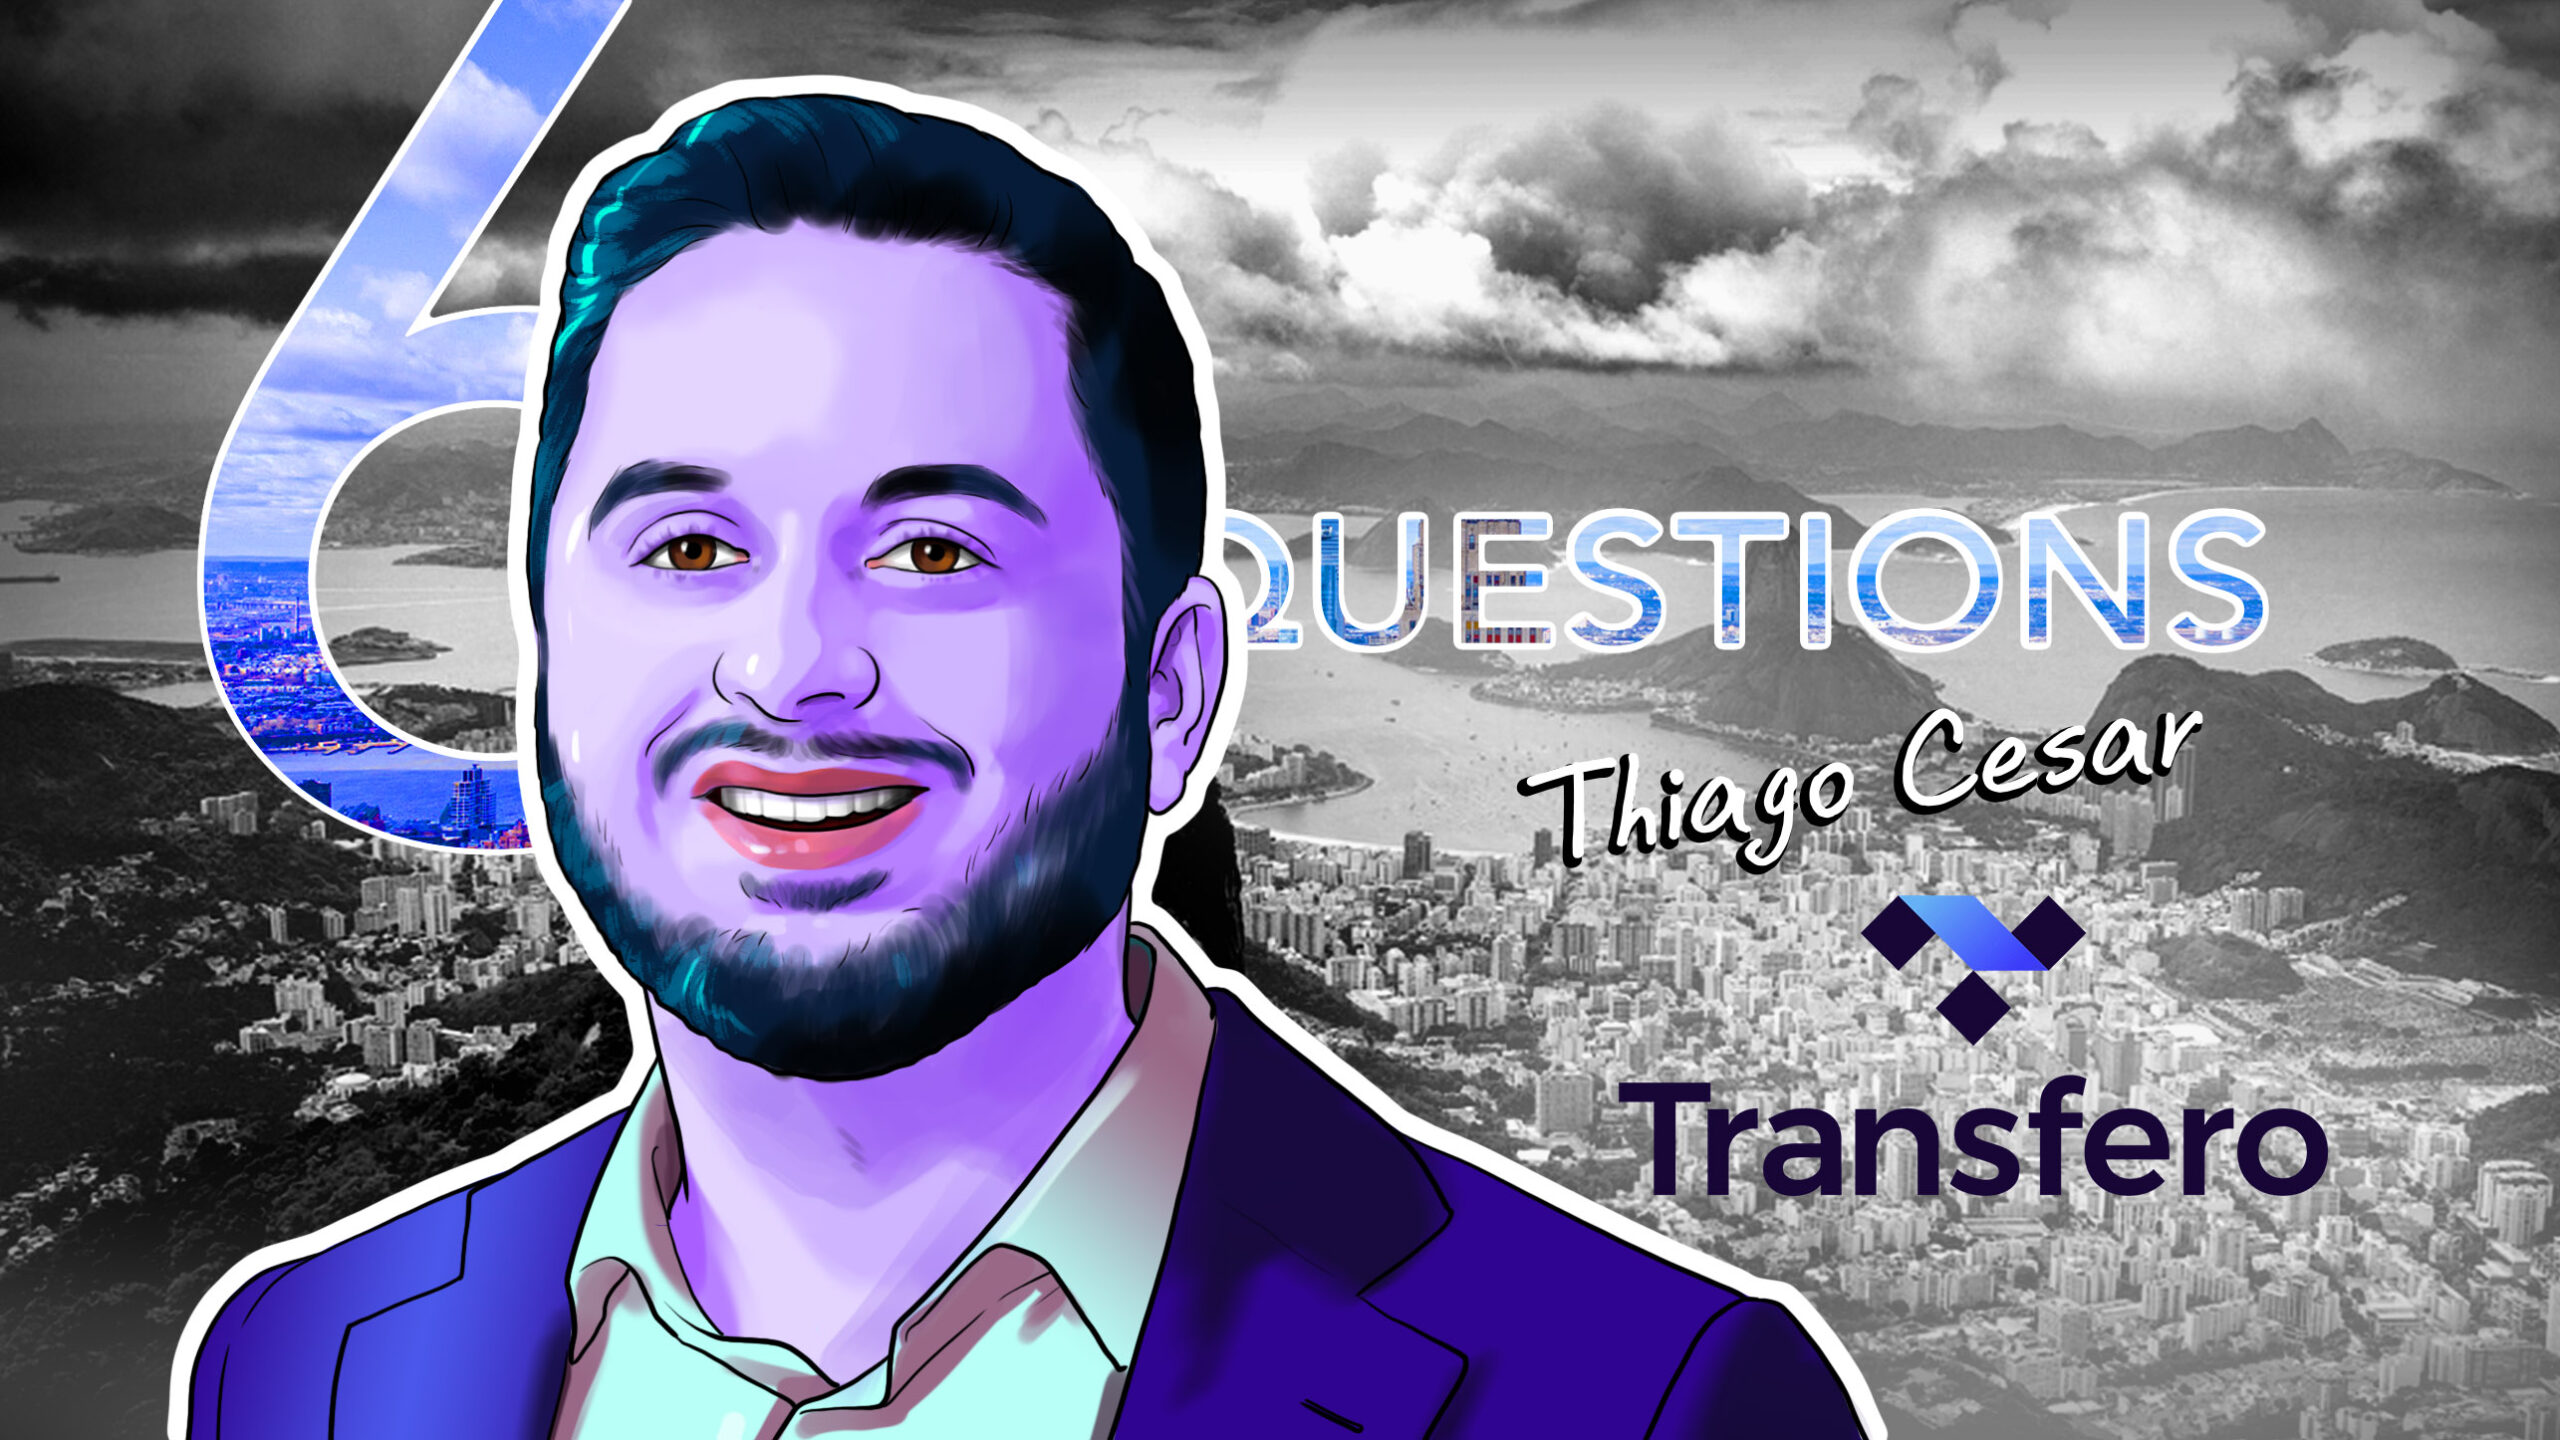 6-questions-for-thiago-cesar-of-transfero